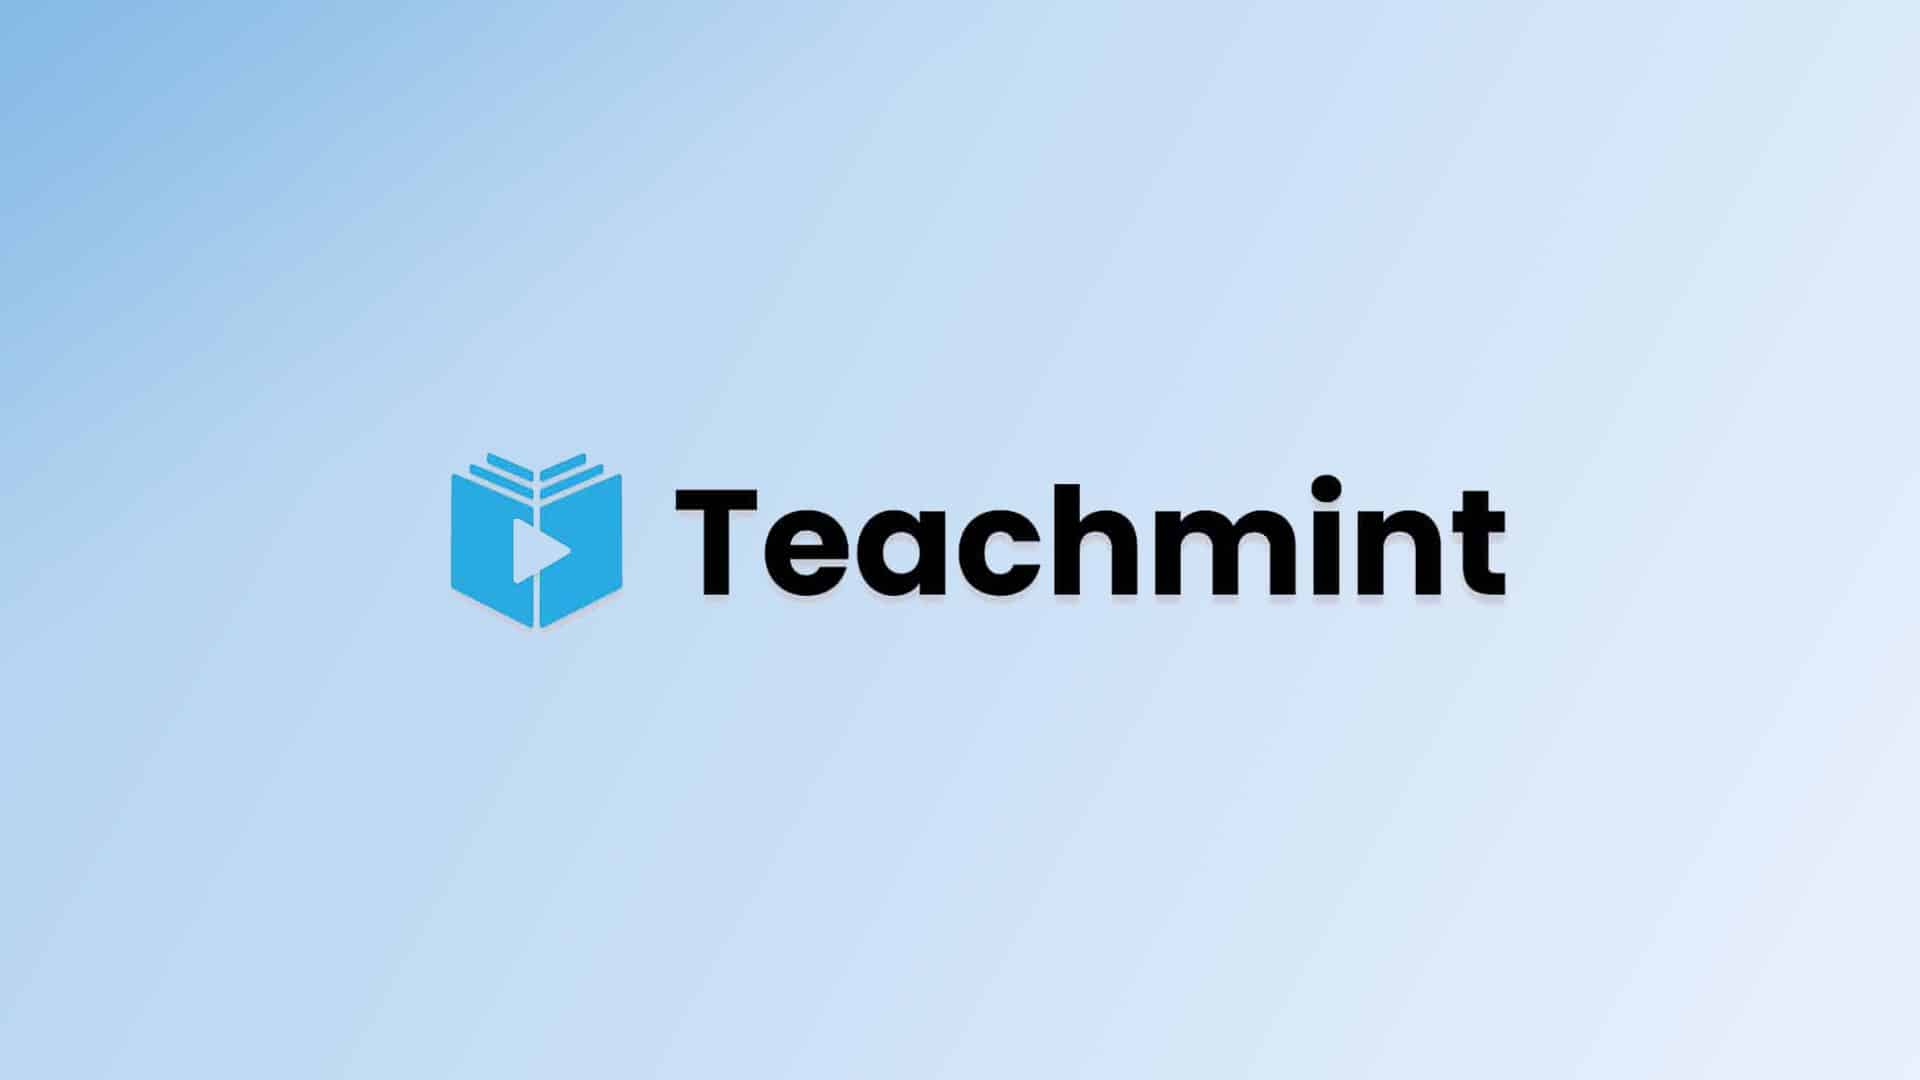 Edtech startup Teachmint raises USD 16.5 million in funding led by Learn capital